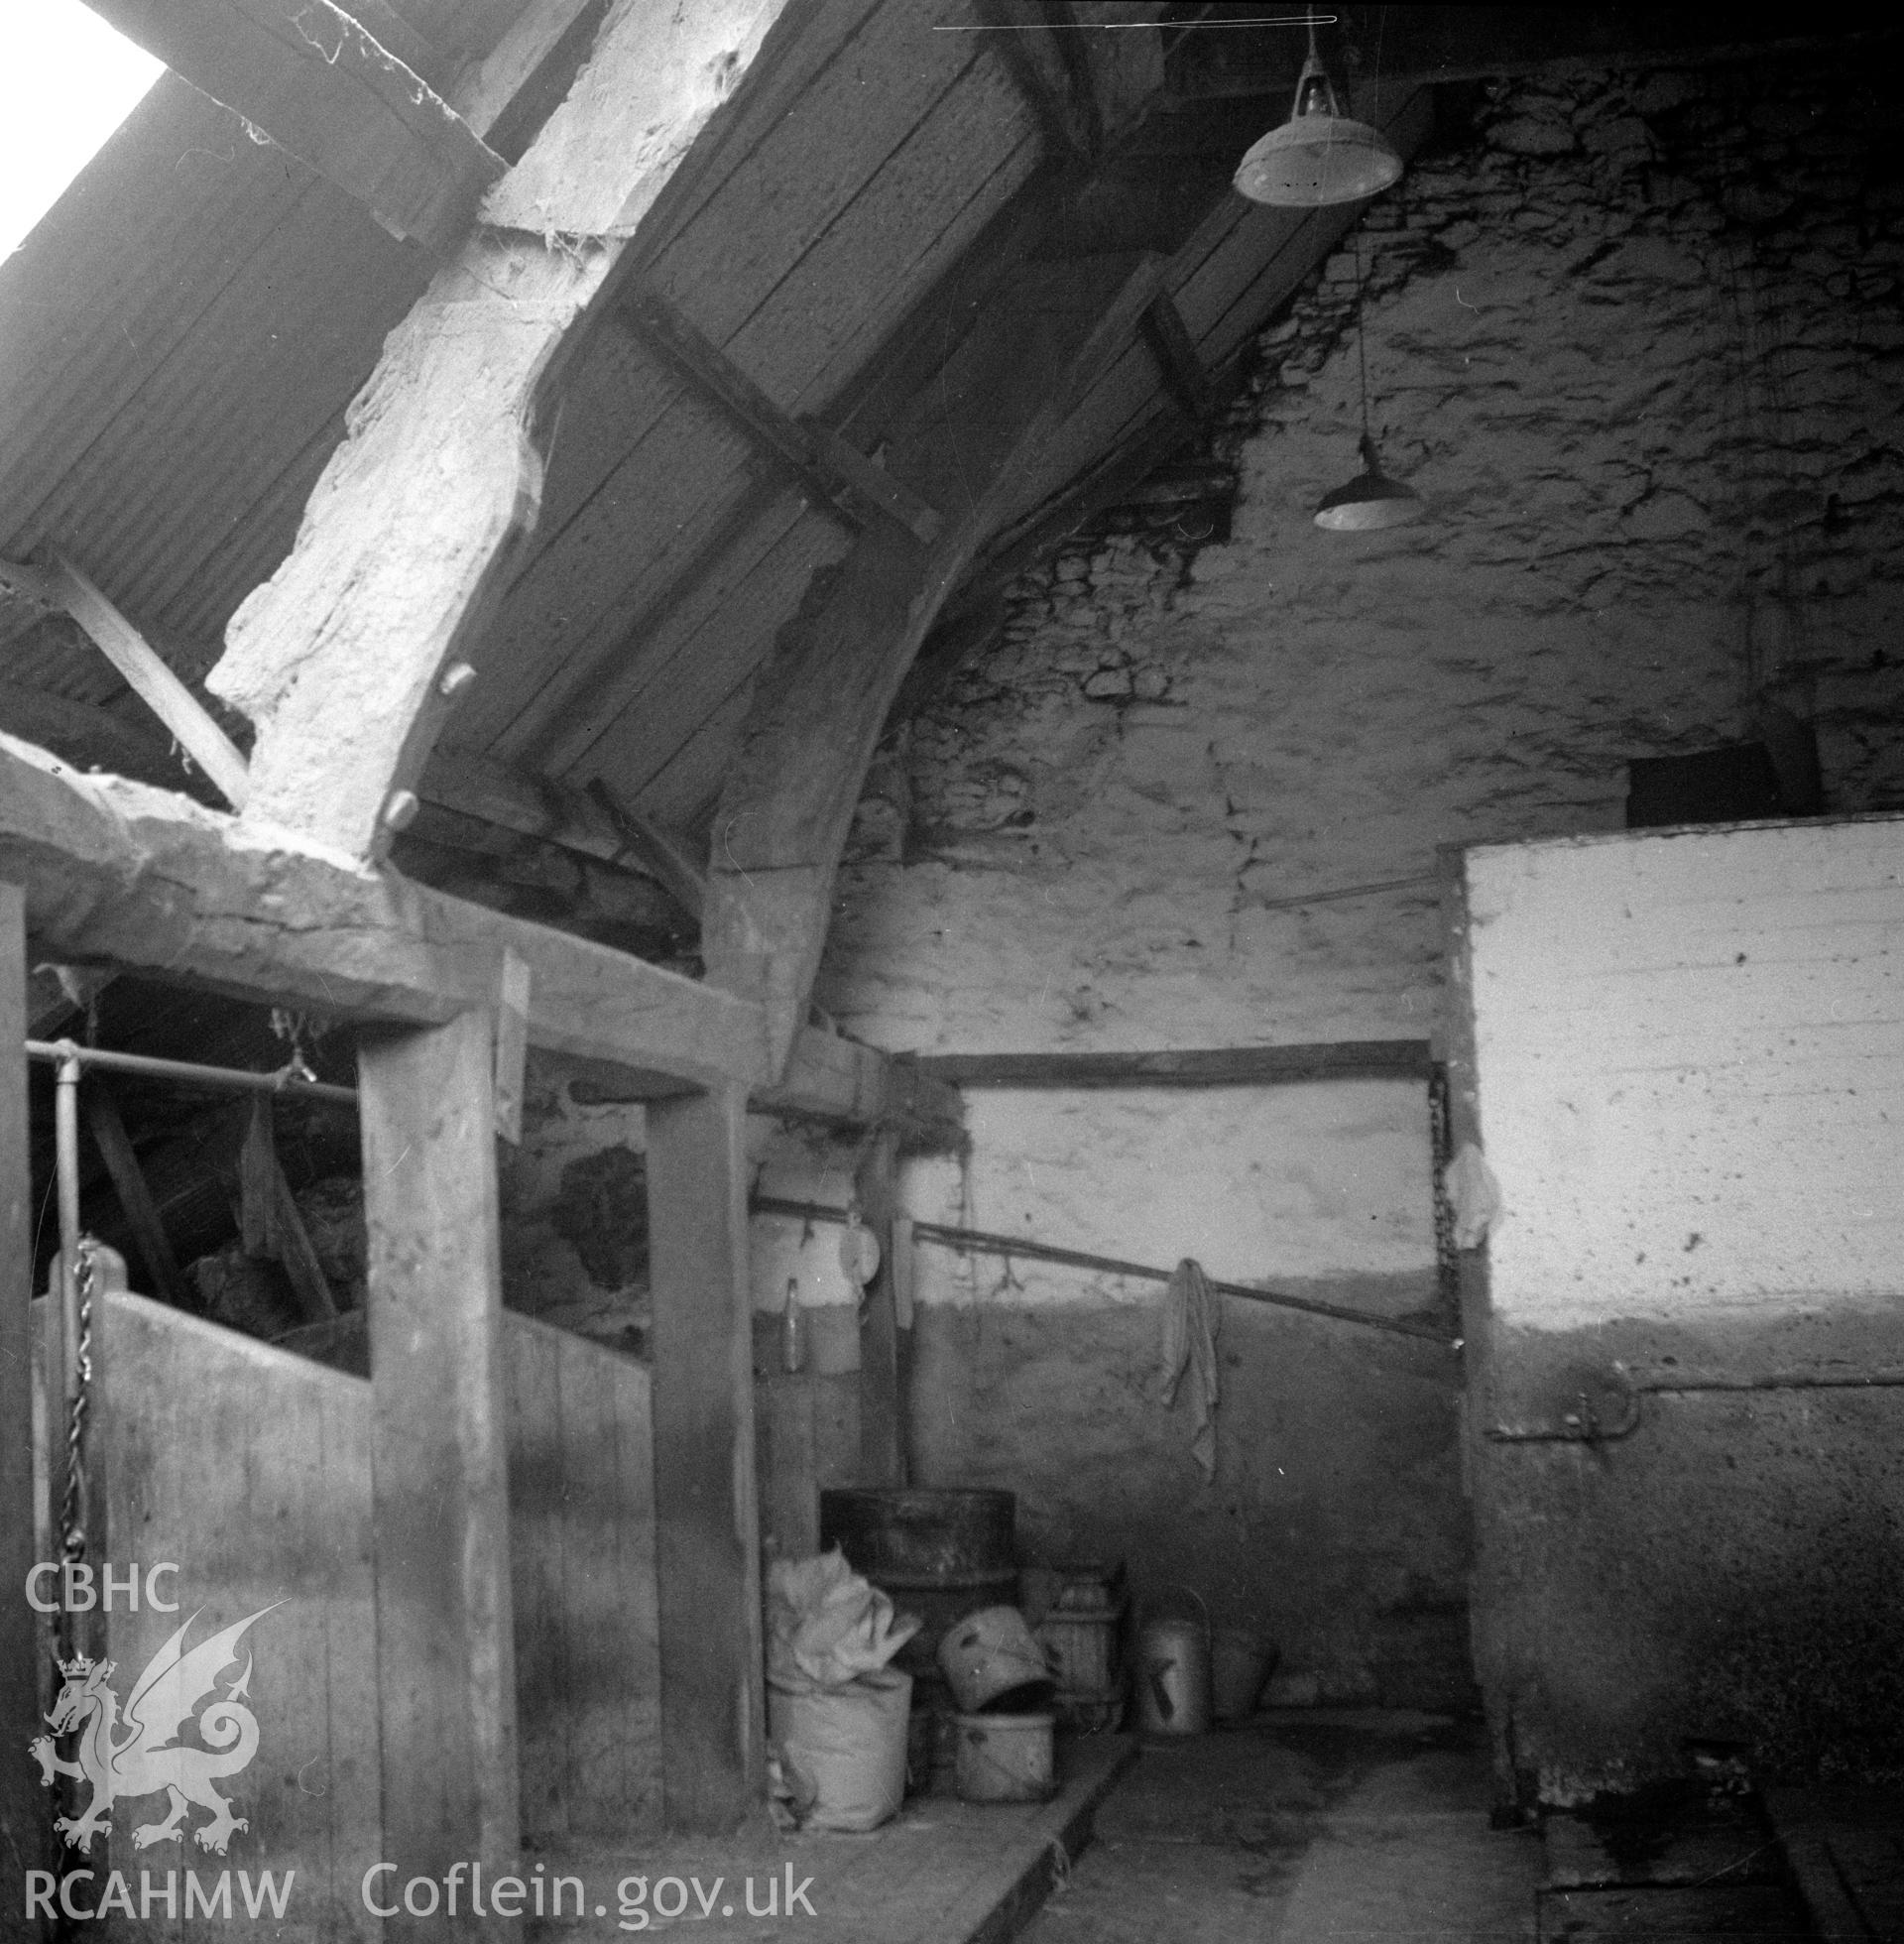 Digital copy of a nitrate negative showing interior view of cruck barn at Maes y Rhiw, Llansadwrn.